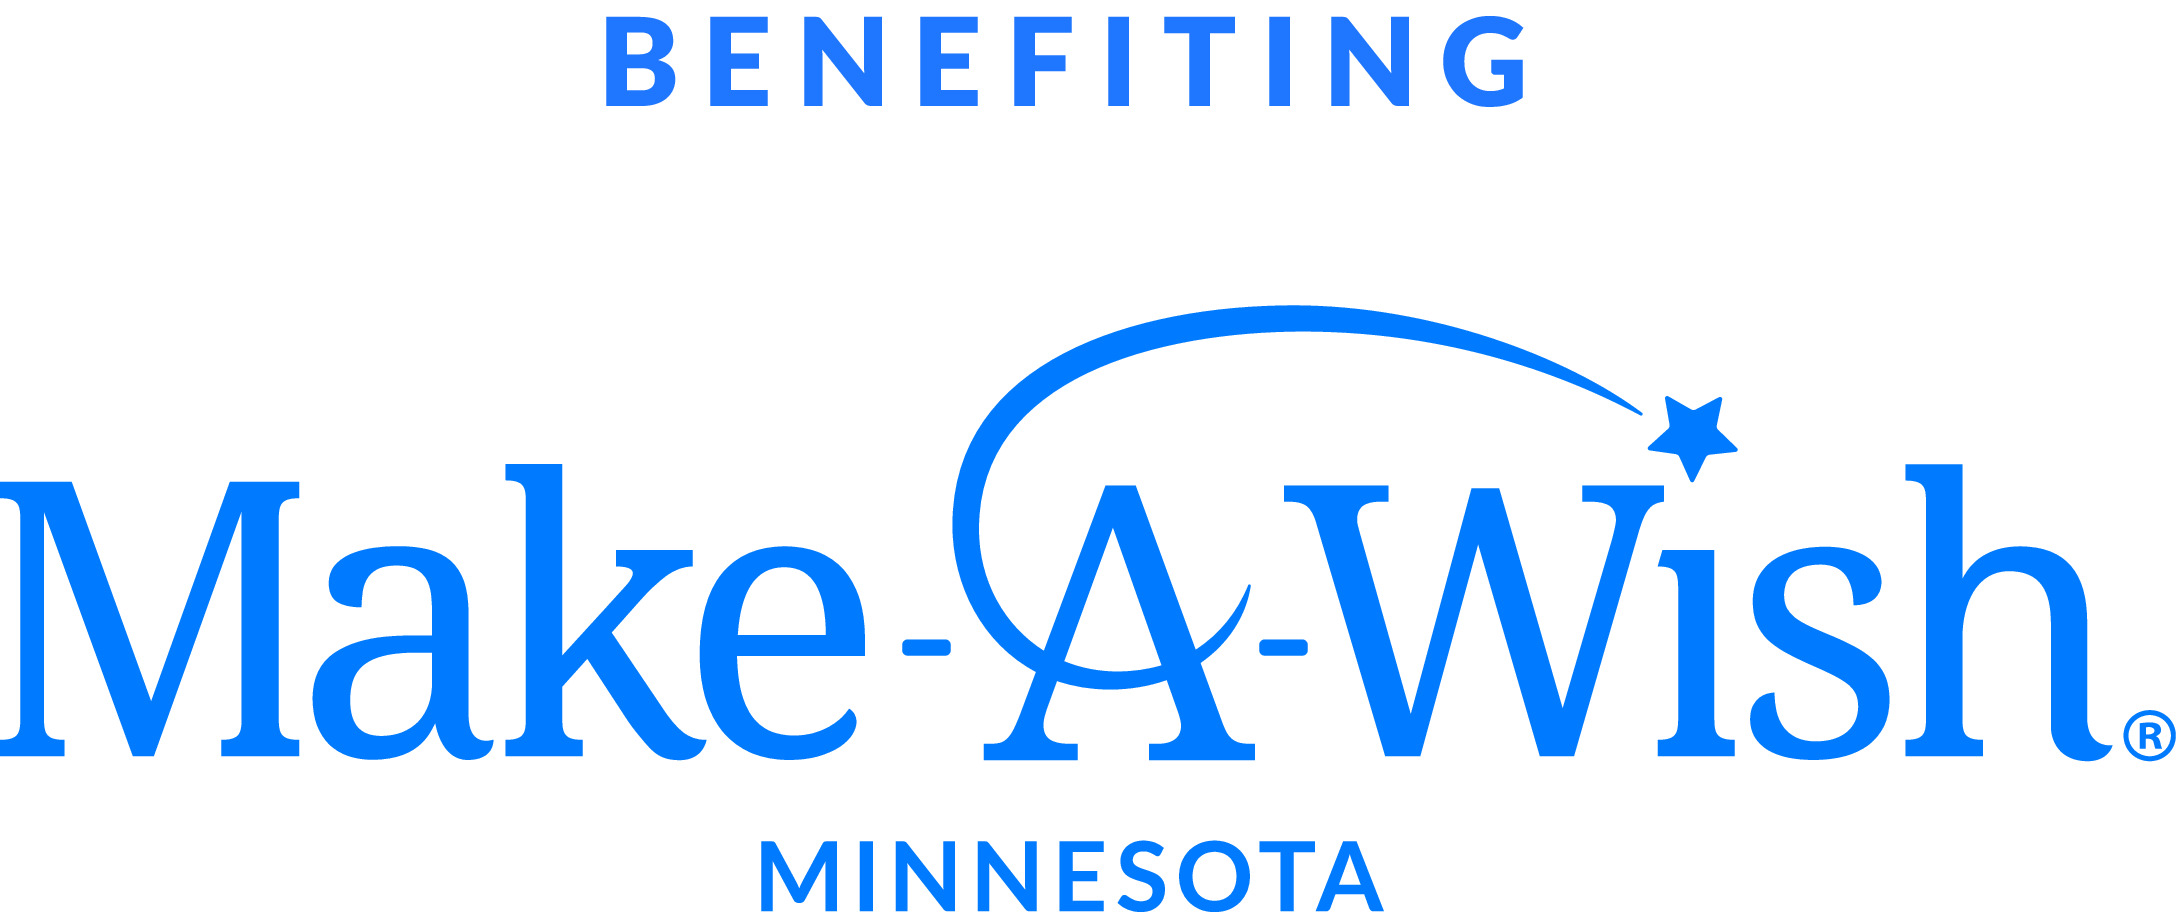 Make-A-Wish logo in blue